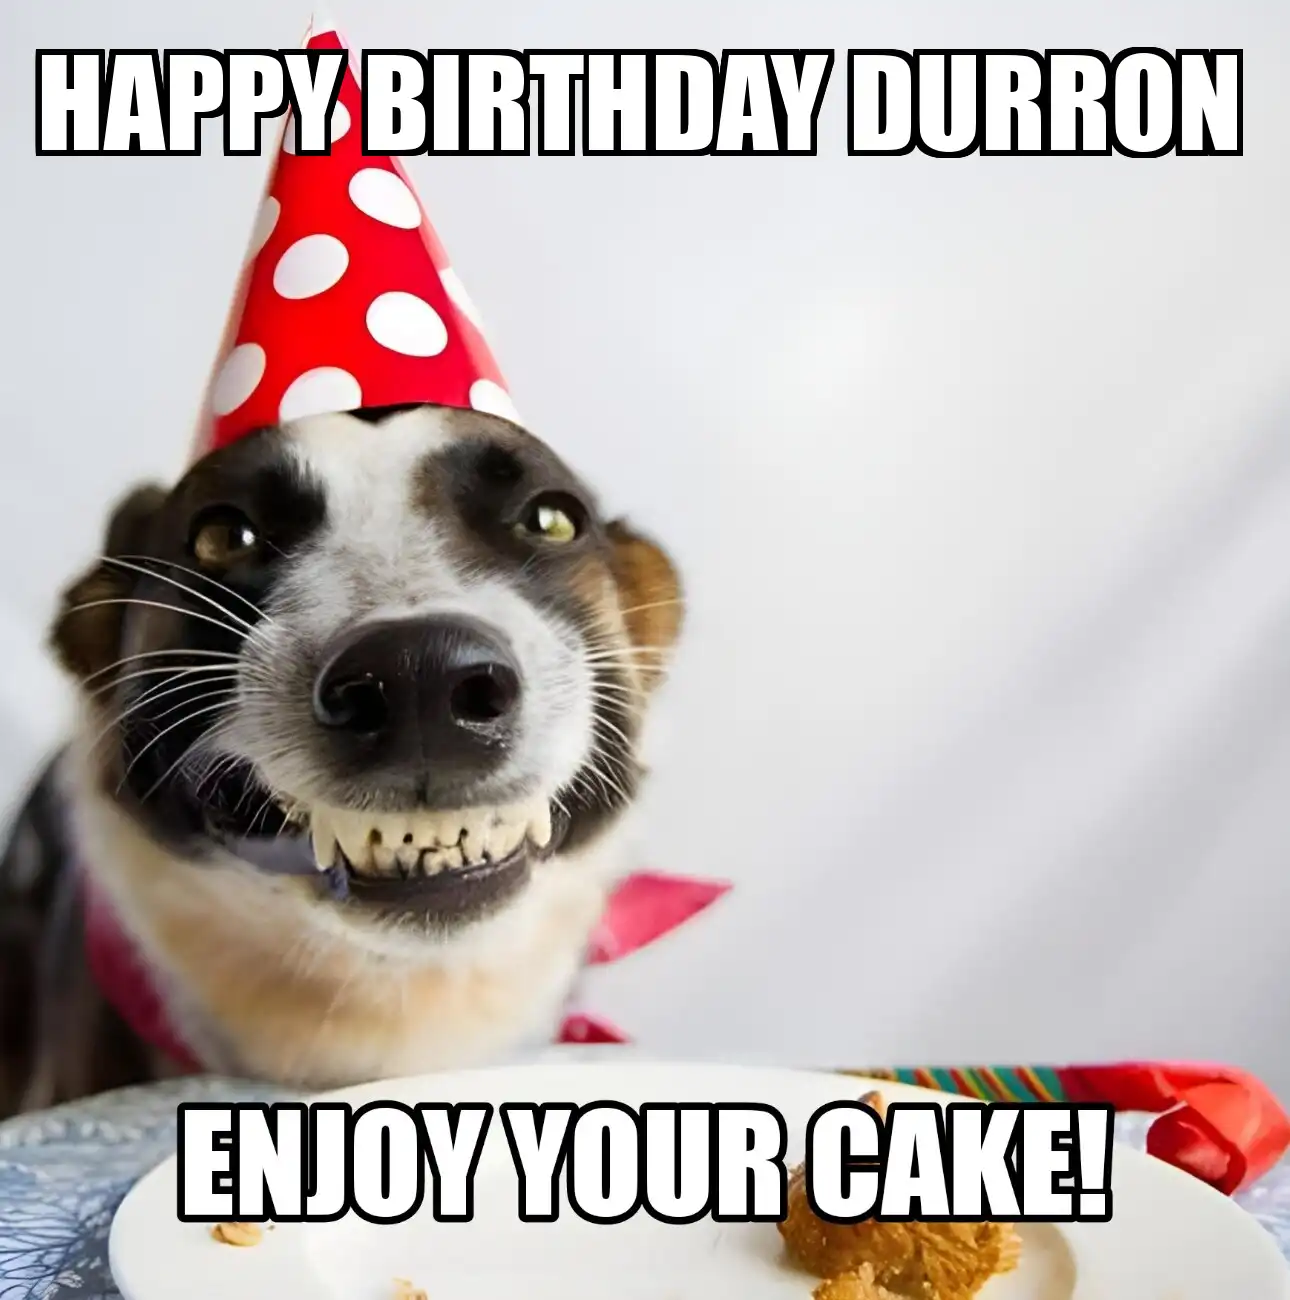 Happy Birthday Durron Enjoy Your Cake Dog Meme